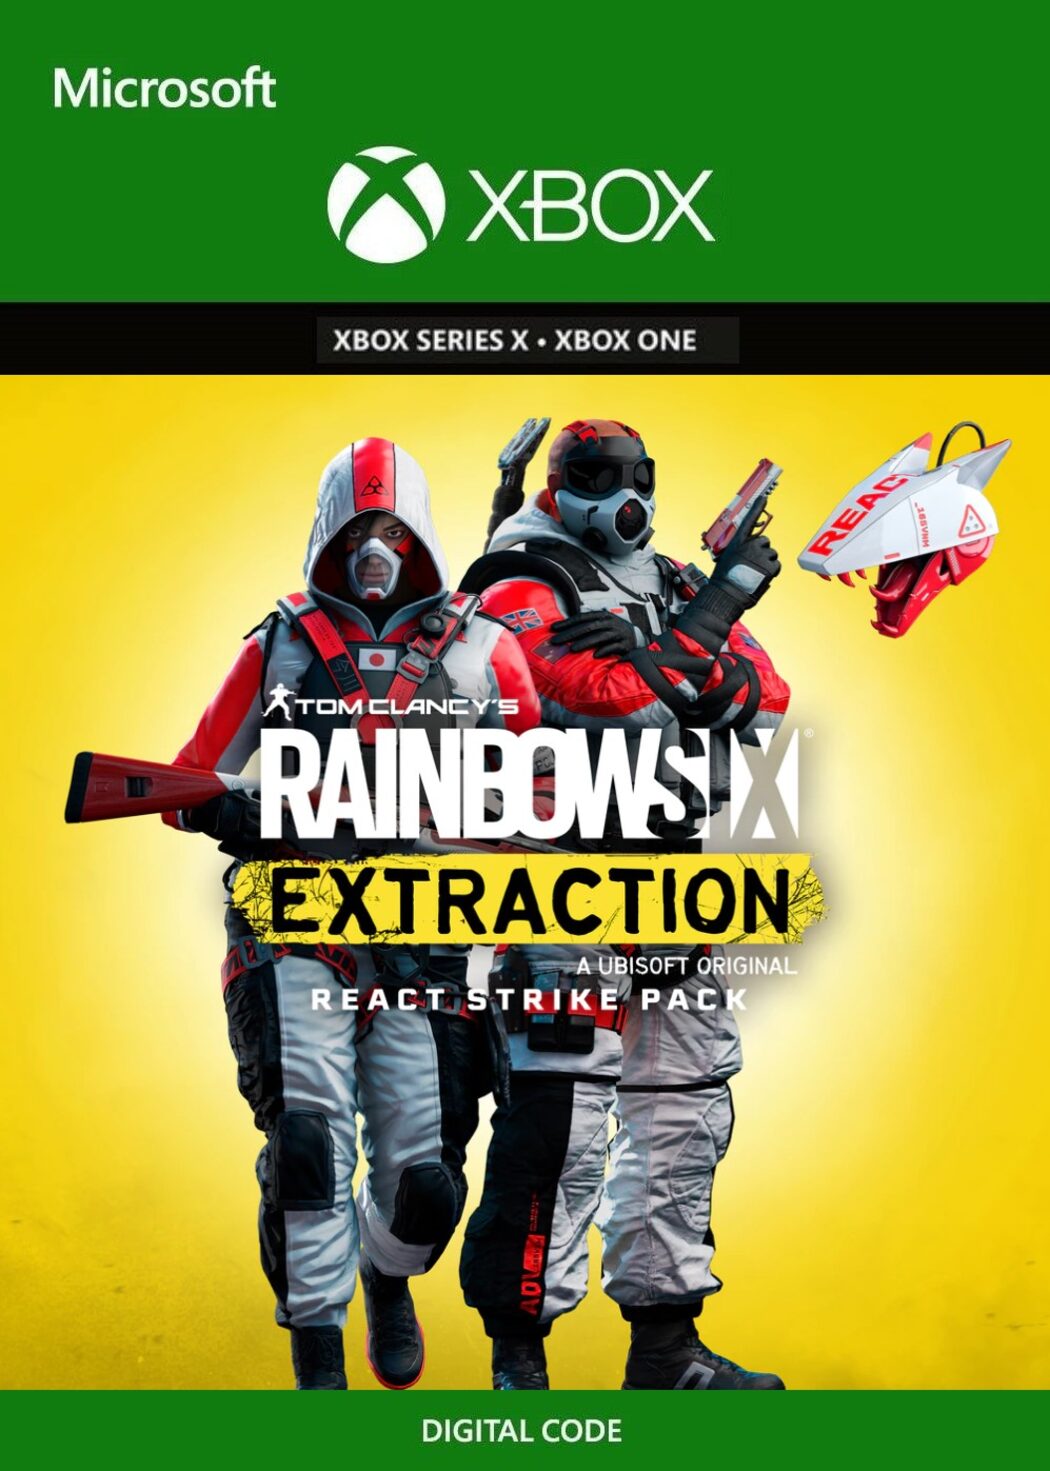 Buy Tom Clancy\'s Rainbow (DLC) Extraction REACT - Pack | Six Cheap Strike ENEBA Xbox price key